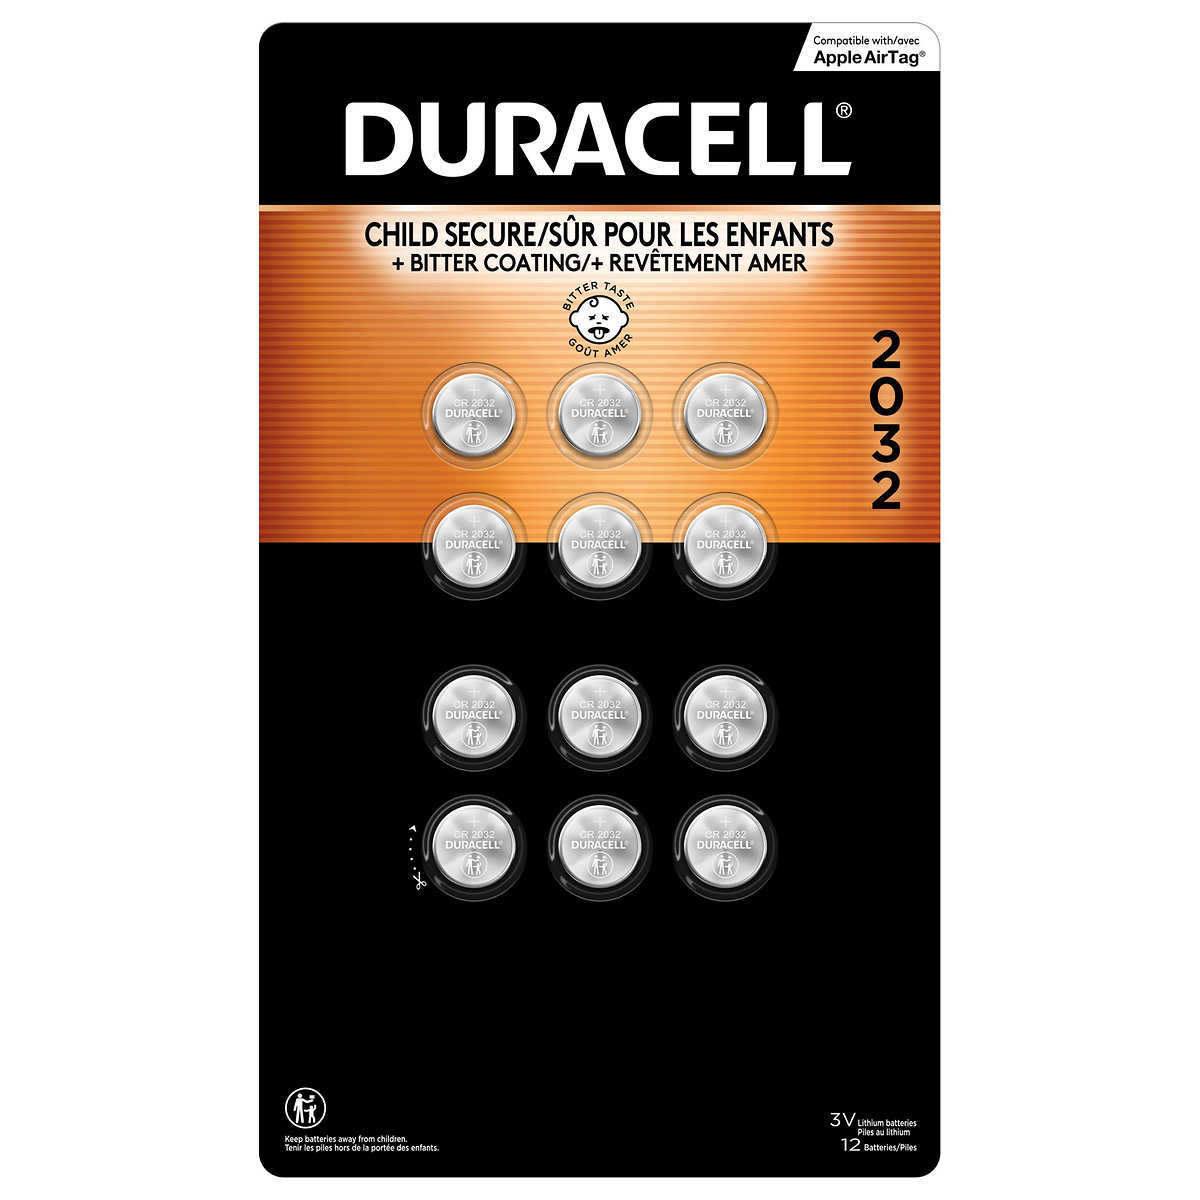 DURACELL DL2032 for Car Key Remote Control Blood Glucose meter 3V